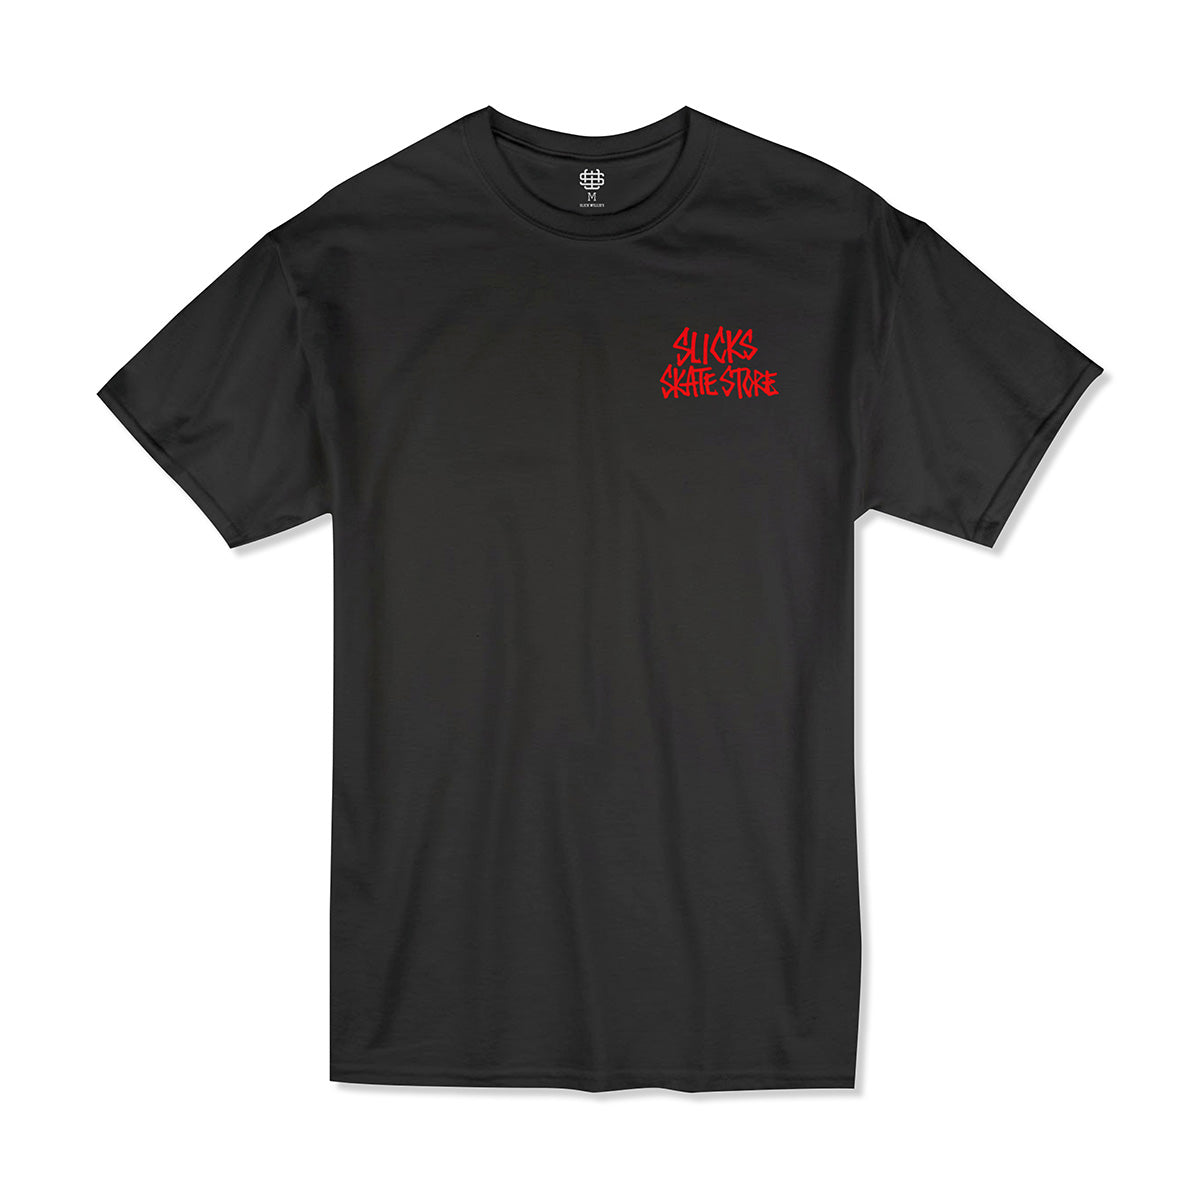 T-Shirt Fos Crossbones de Slick's Skate Store - Noir